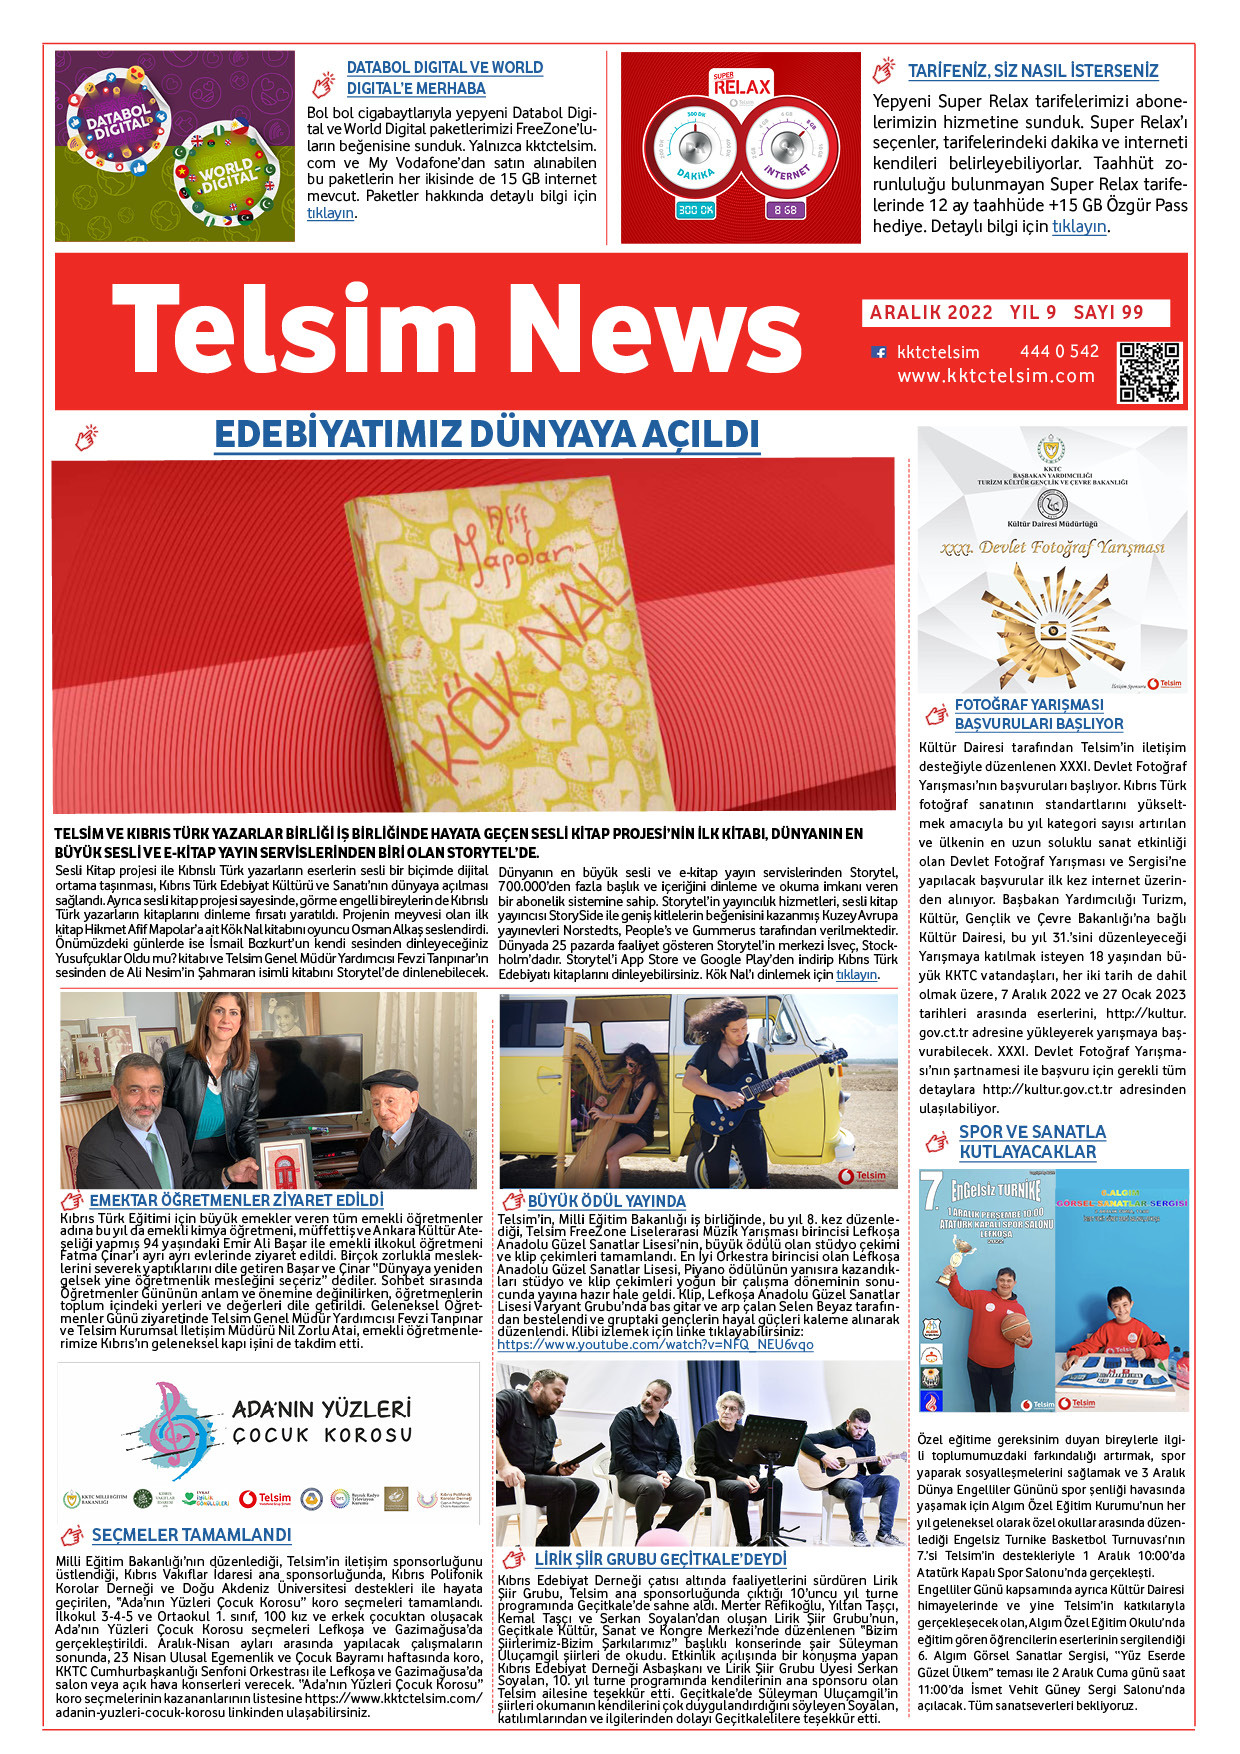 Telsim News Aralık 2022